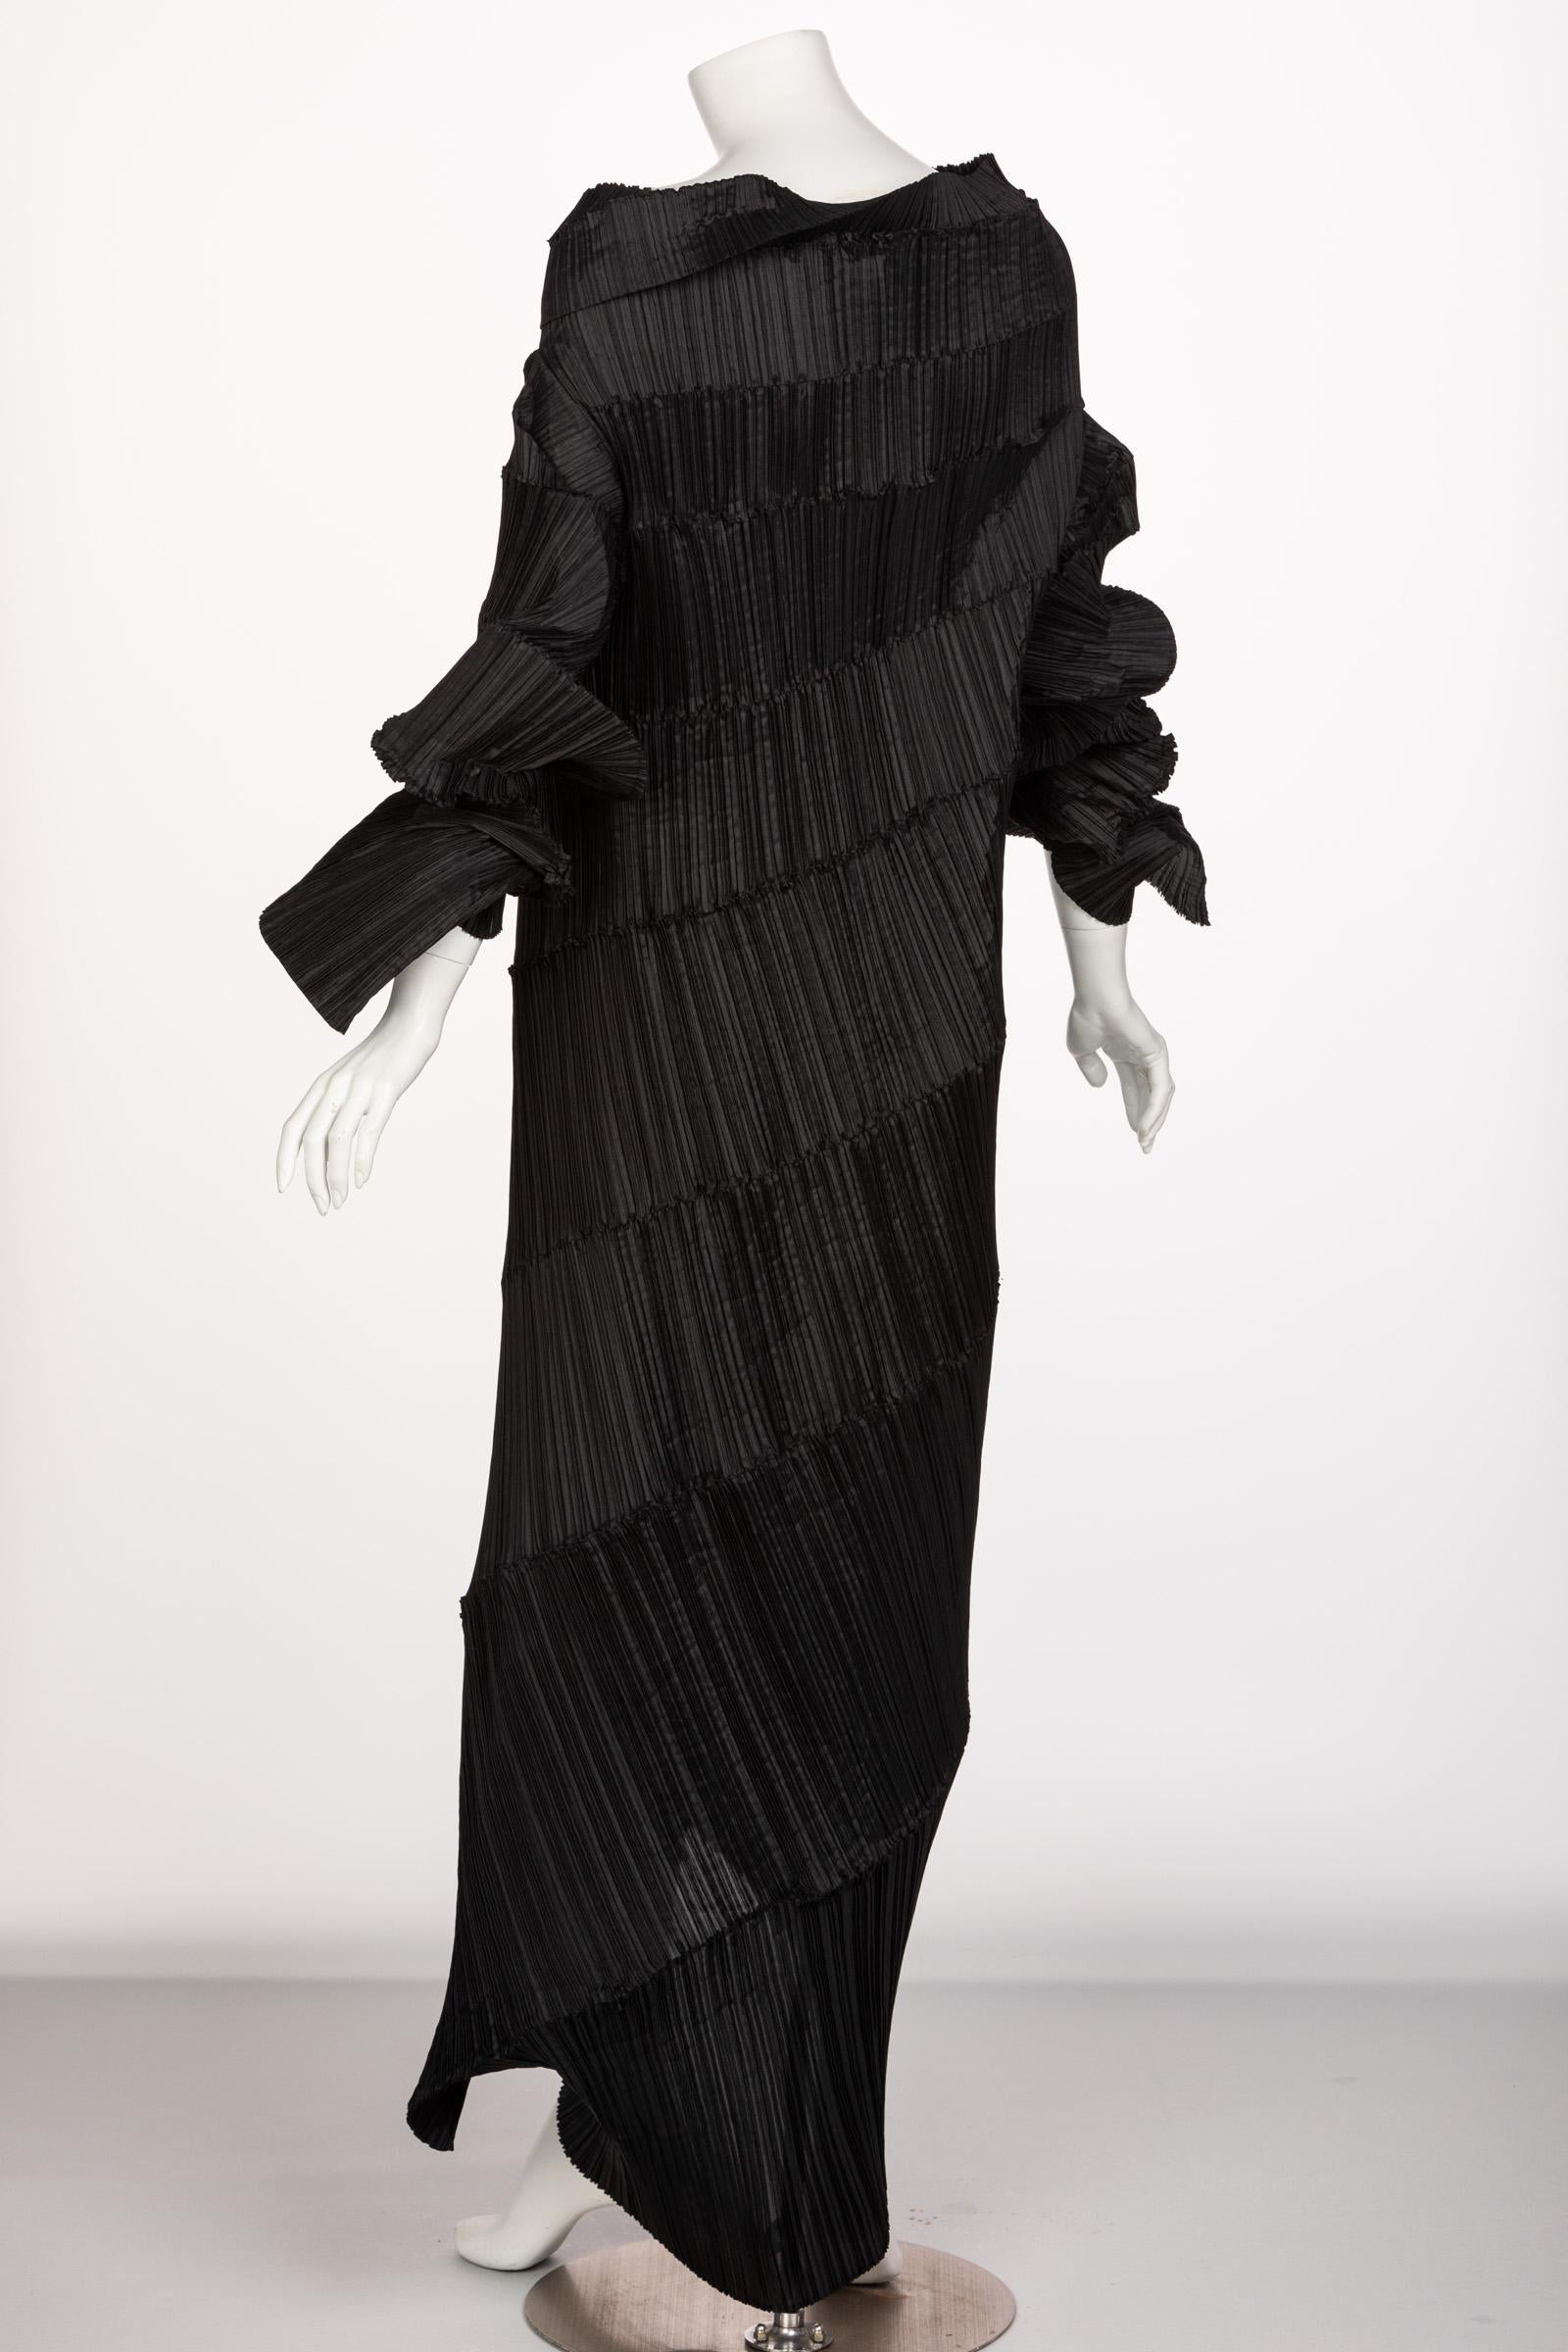 Women's Issey Miyake Black Pleated Spiral Dress, 1990s